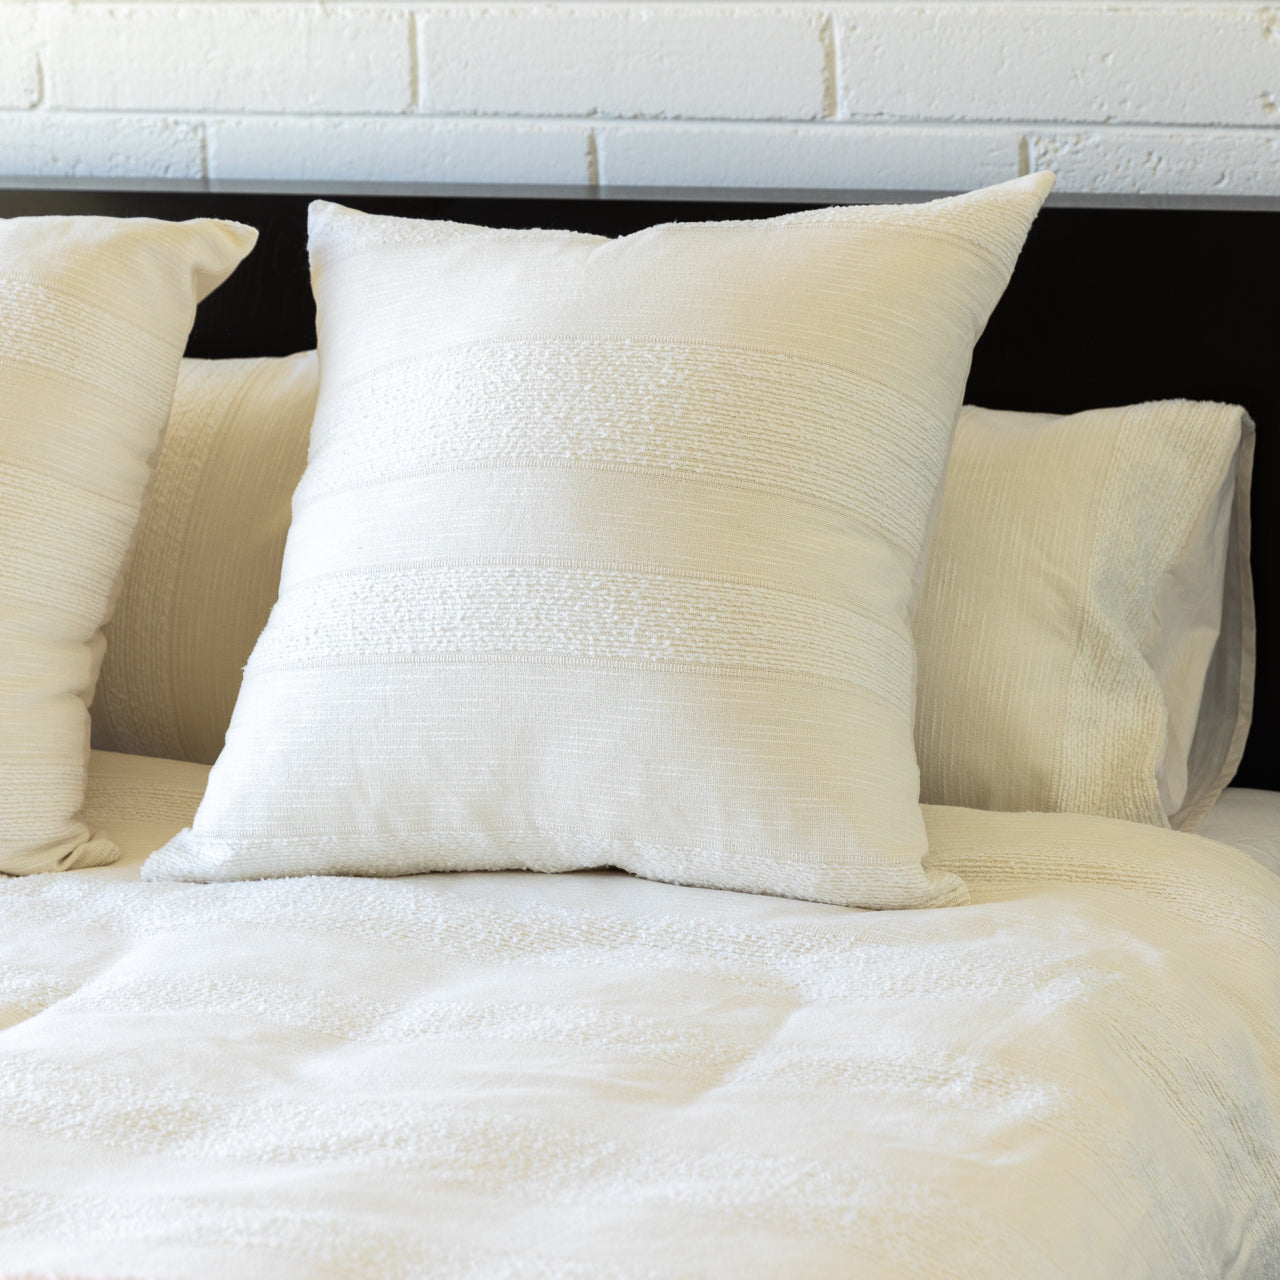 Mykonos European Pillowcase on bed